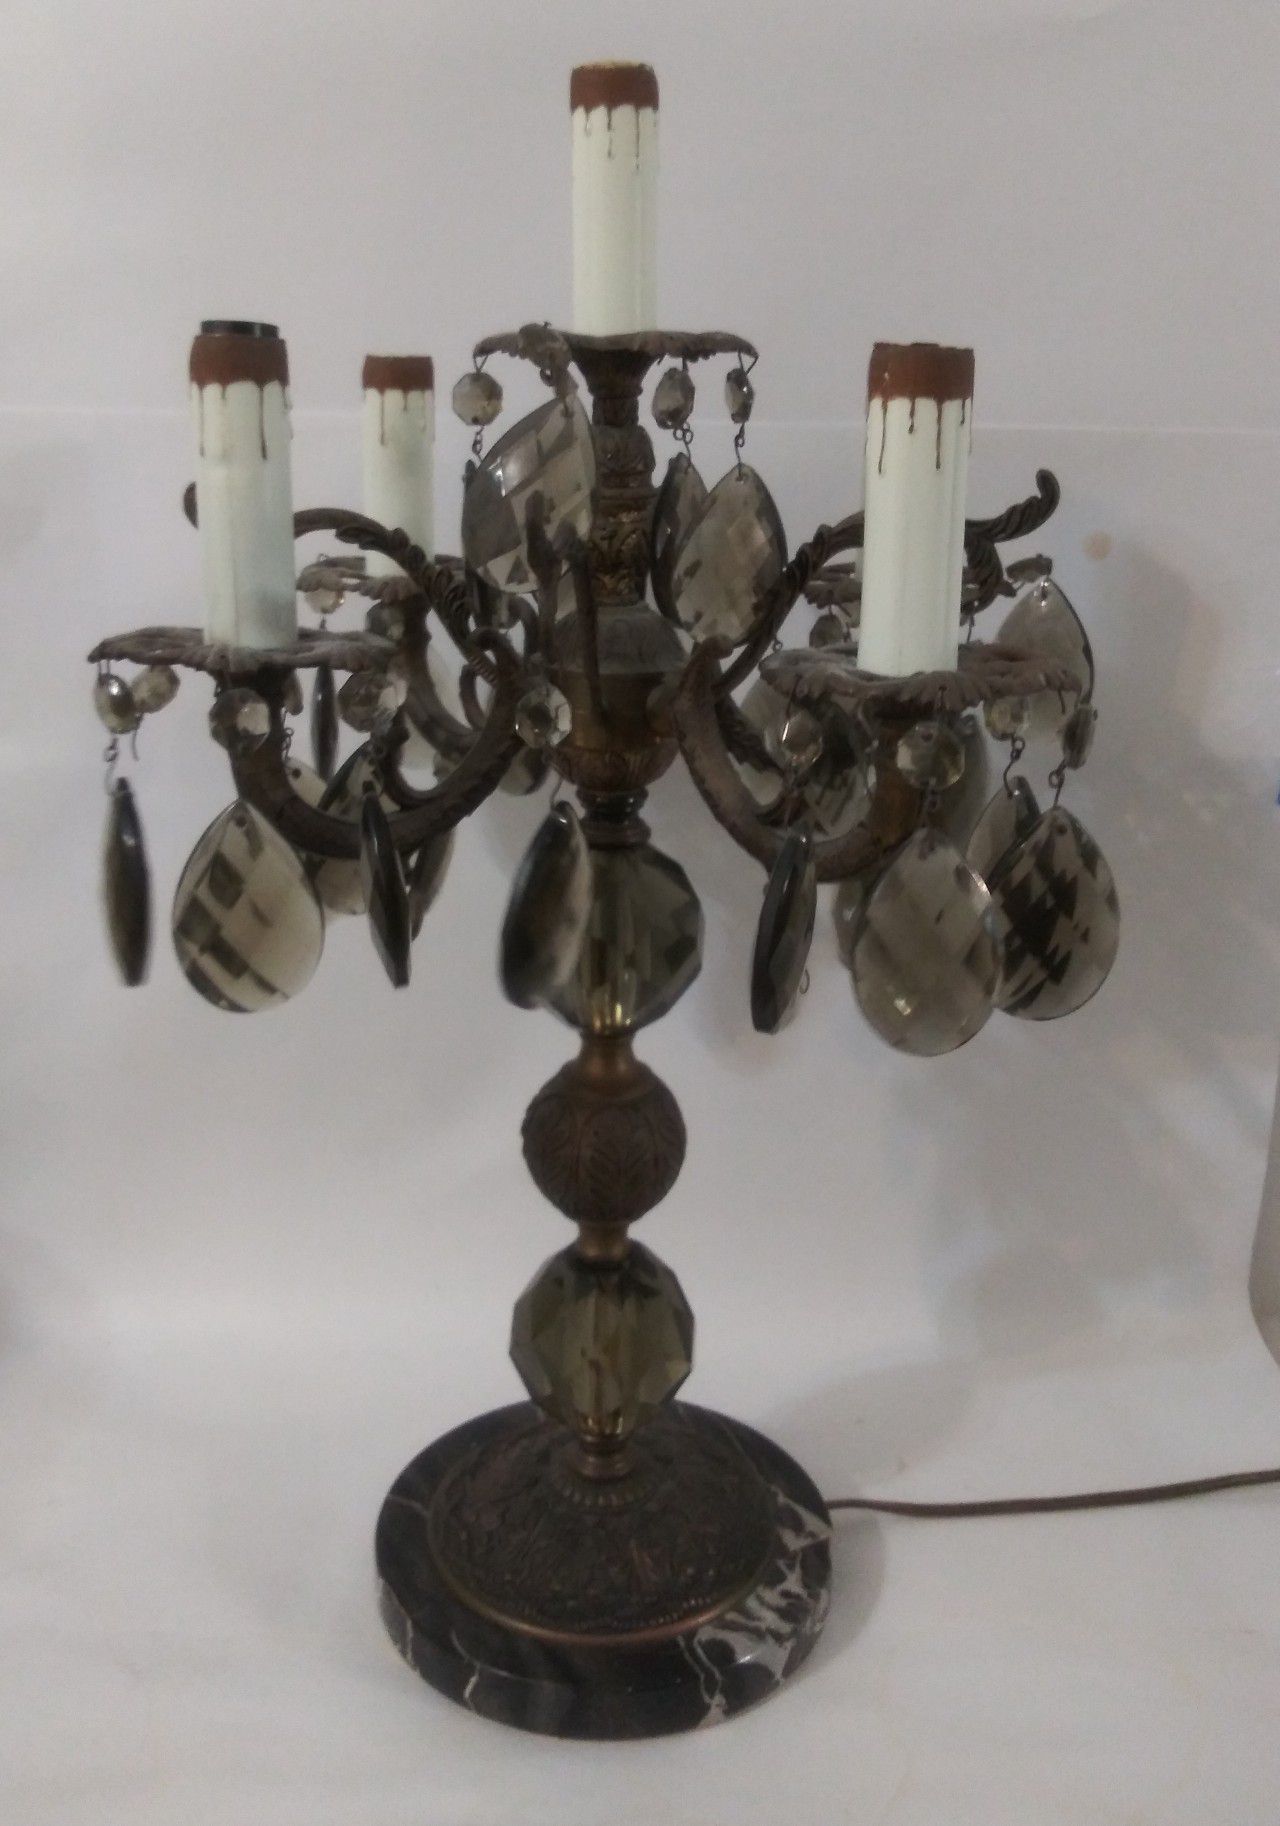 Antique candelabra 5 lights brass lamp electric